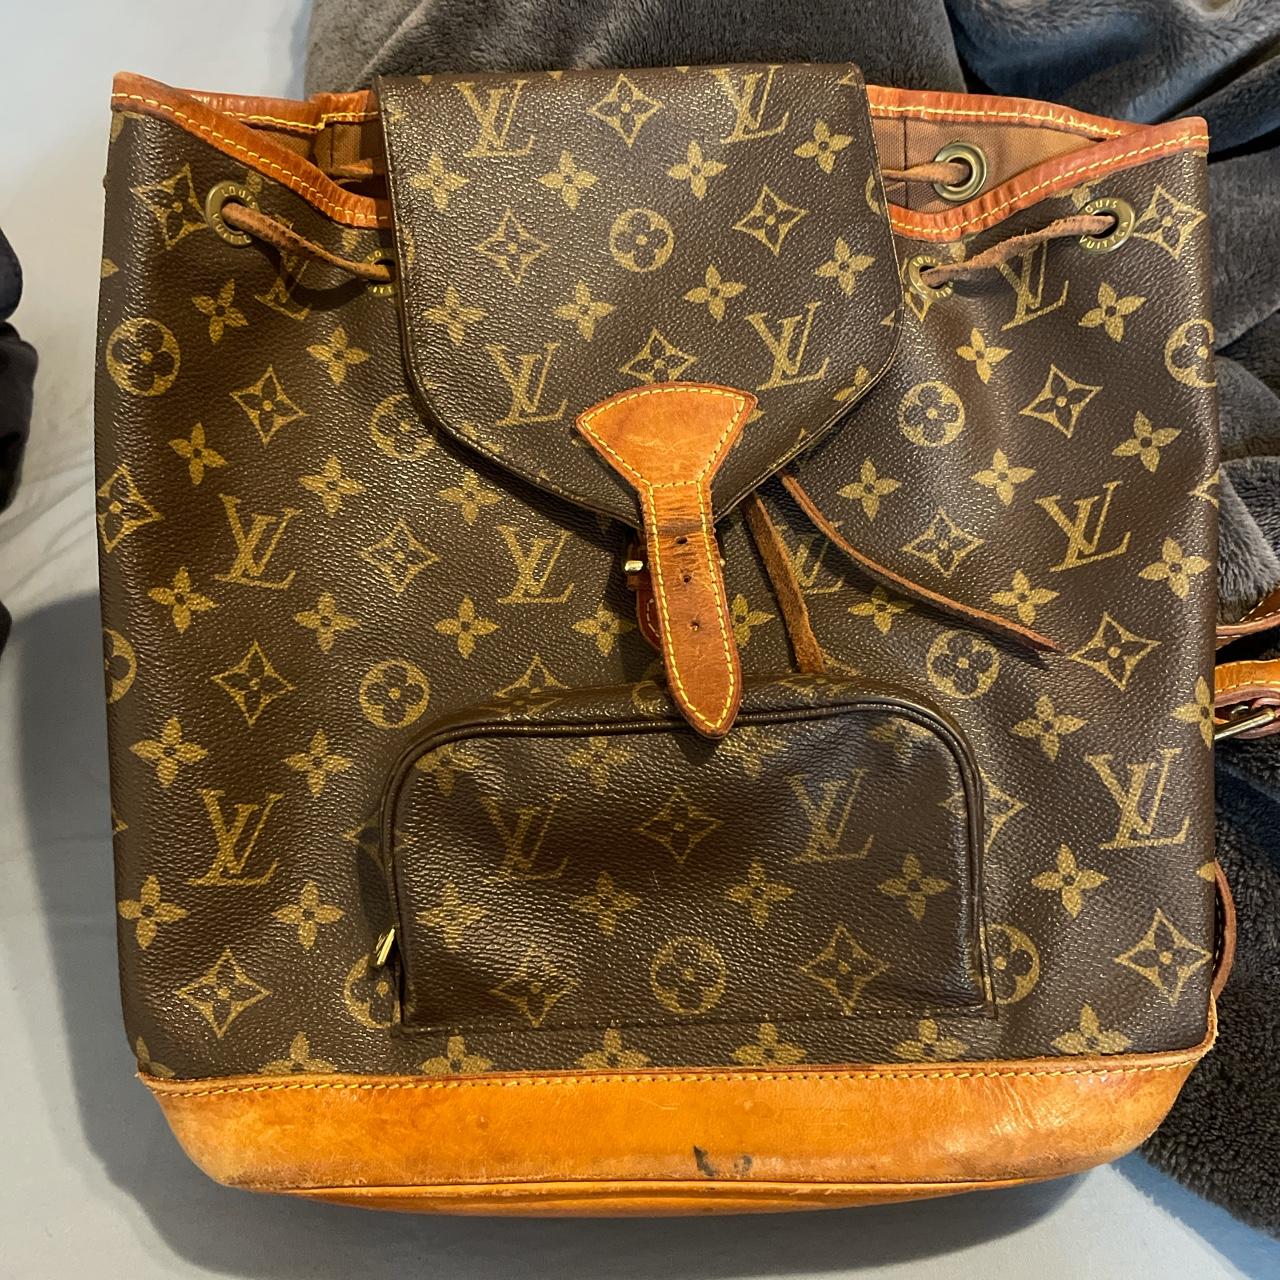 Vintage Louis Vuitton backpack, the backpack has - Depop